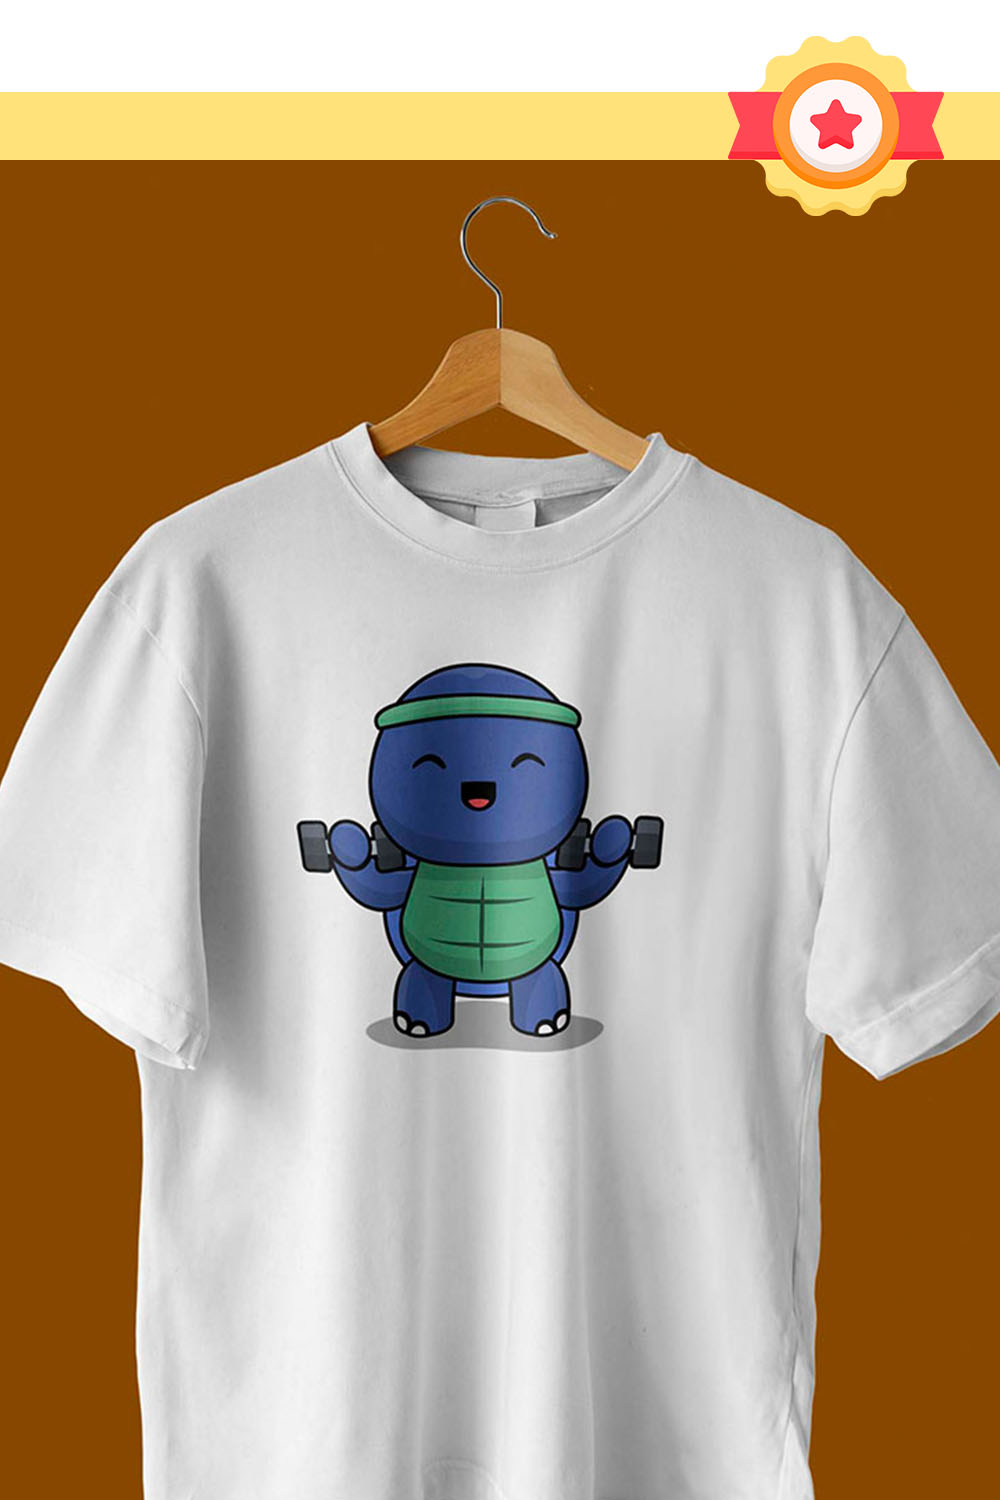 Cute Turtle Gym Illustration T-Shirt Design Pinterest image.